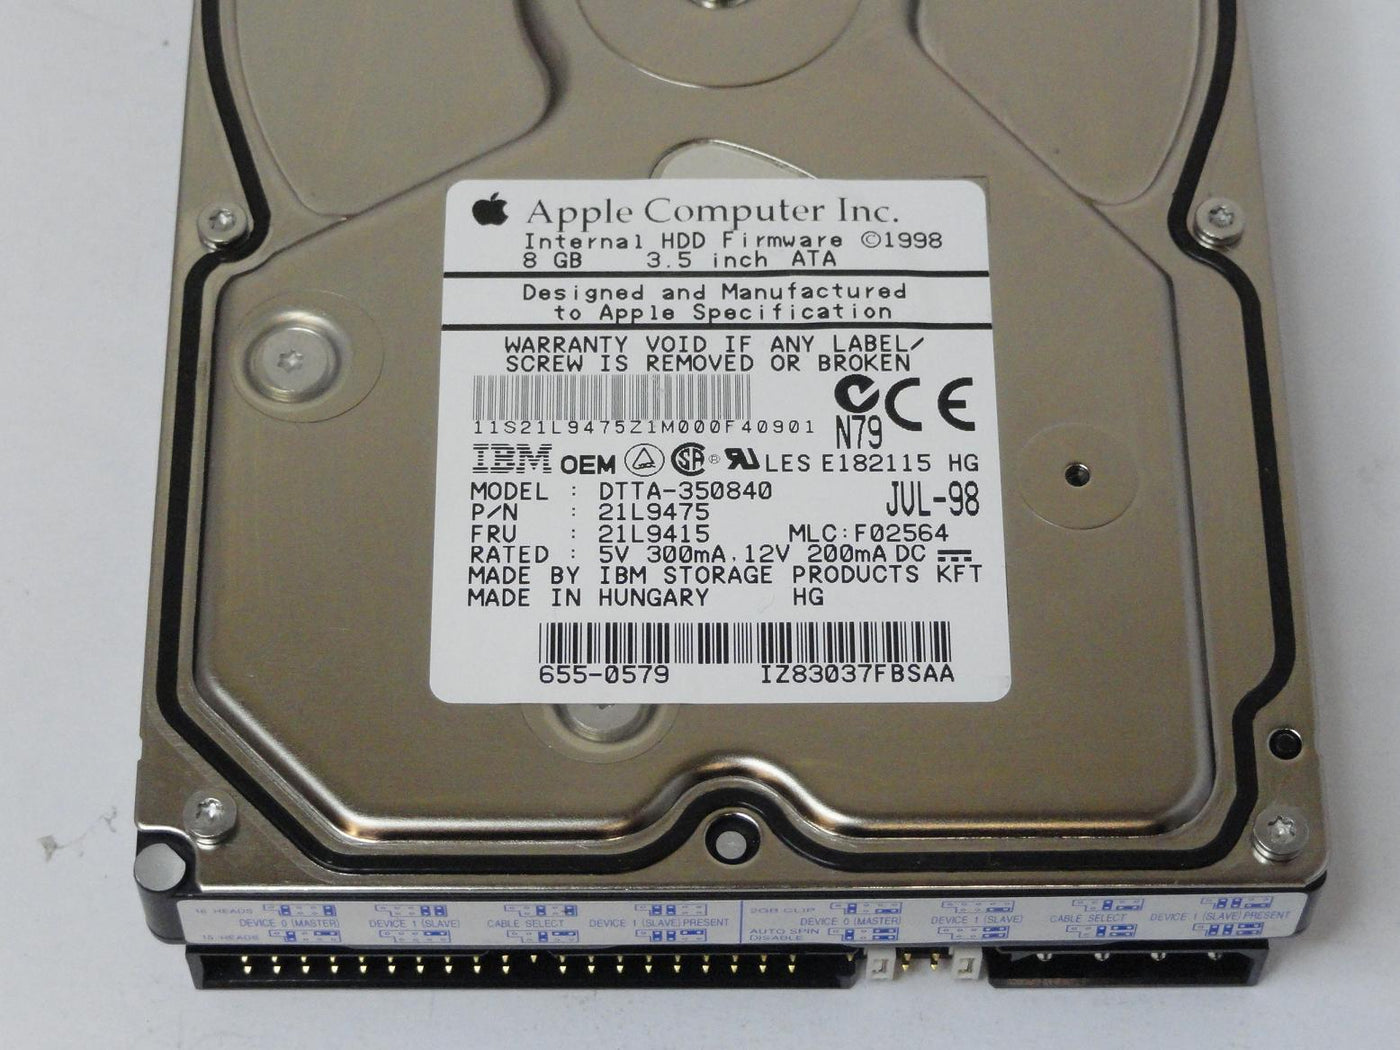 MC0607_21L9475_IBM Apple 8GB IDE 5400rpm 3.5in HDD - Image3